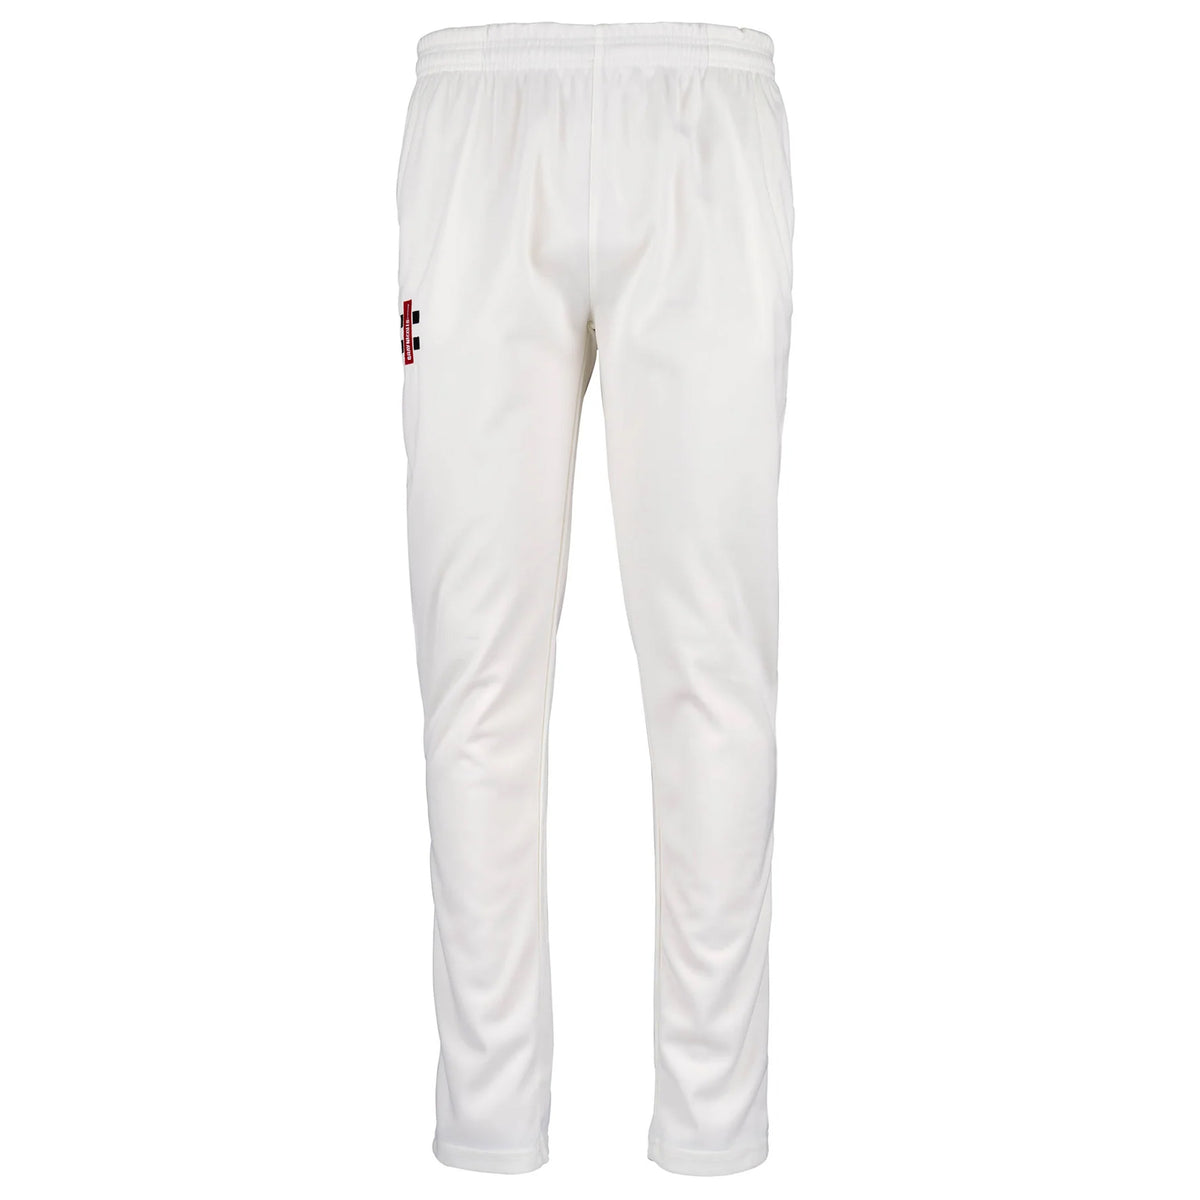 Gray Nicolls Matrix V2 Slim Fit Junior Cricket Trousers: Ivory